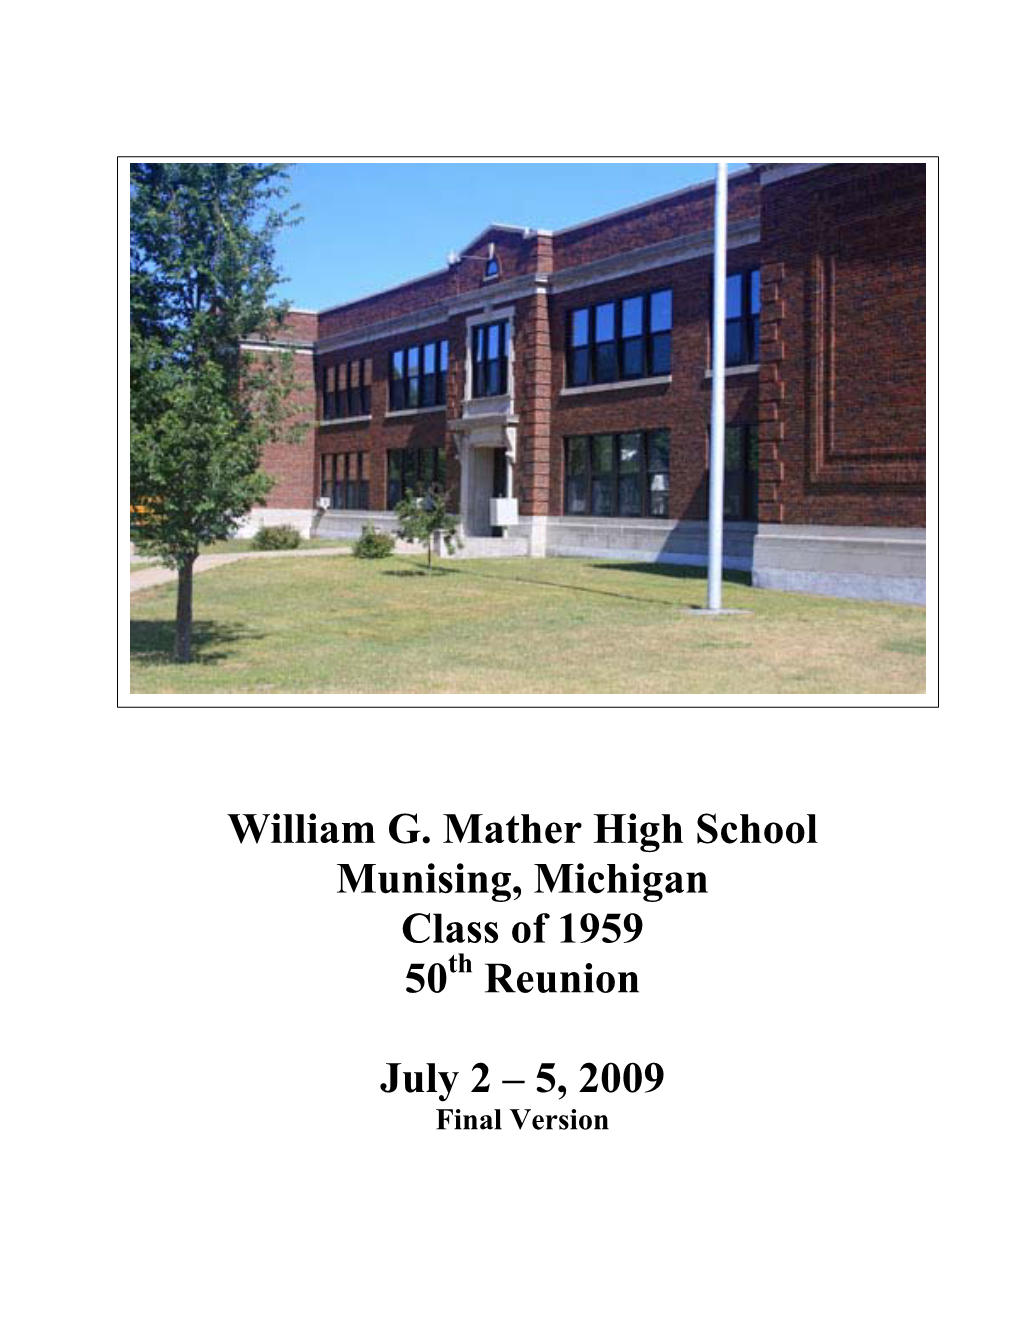 William G. Mather High School Munising, Michigan Class of 1959 50Th Reunion